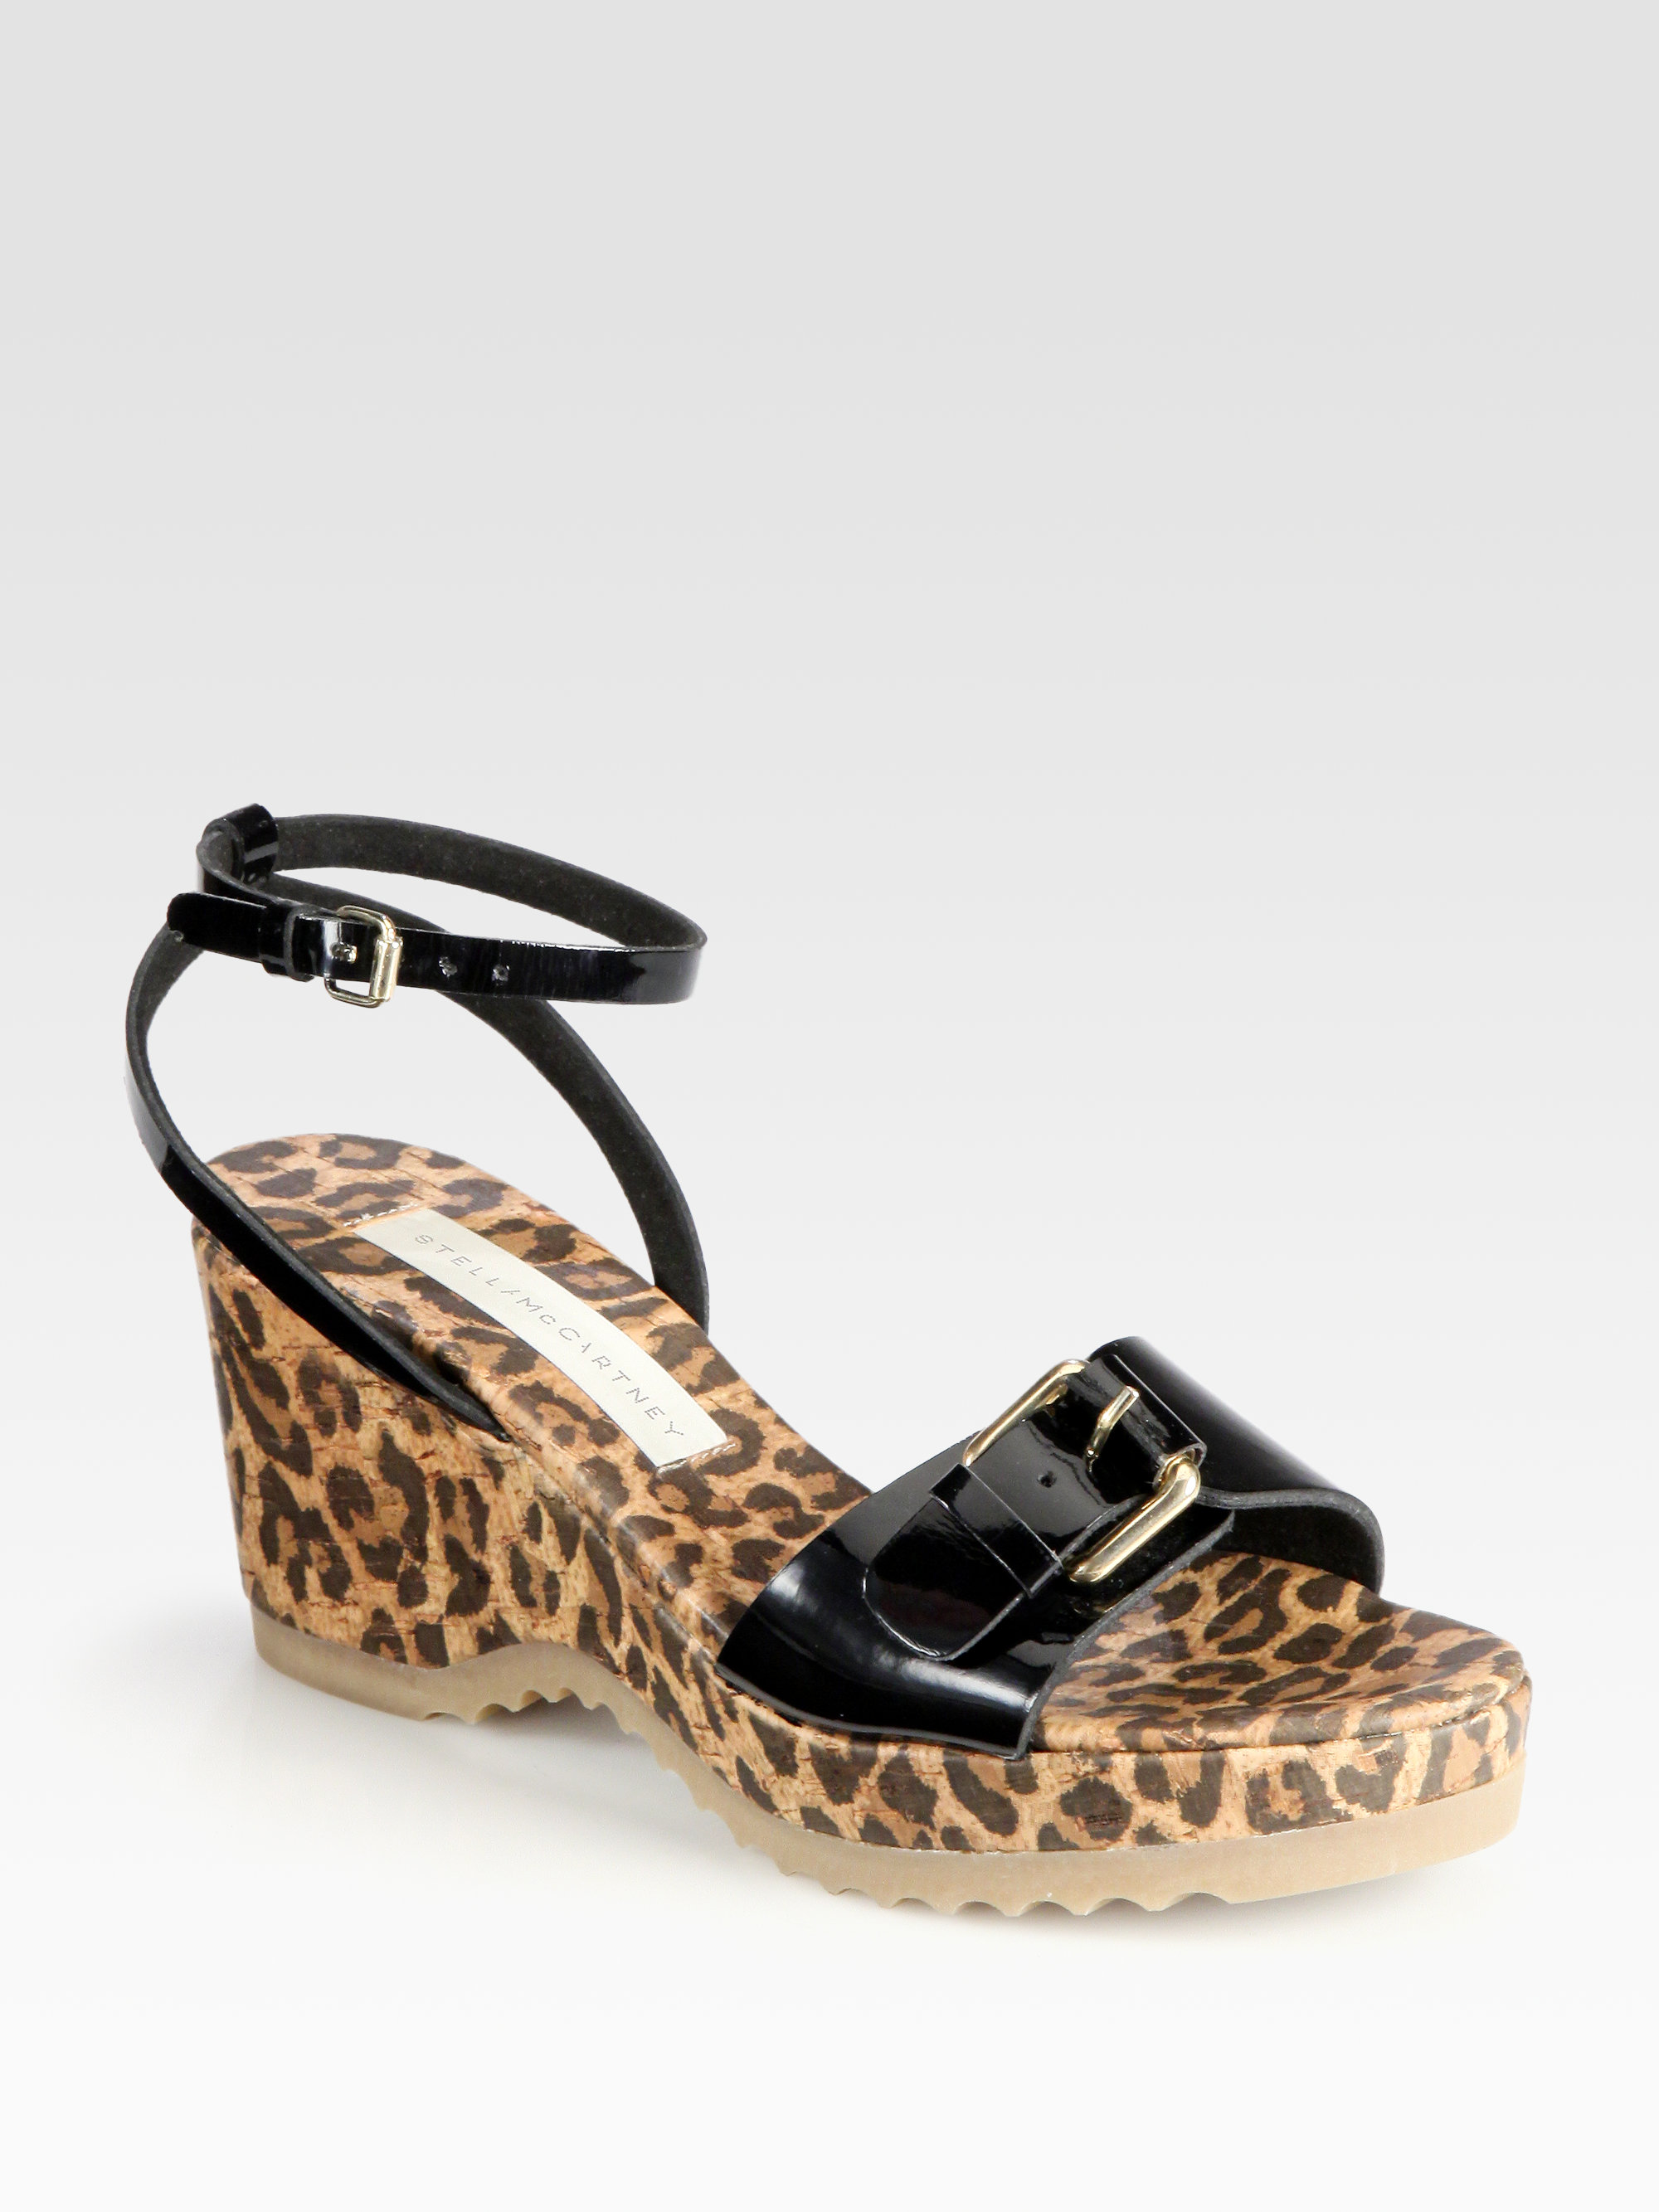 ... Mccartney Linda Leopard-Print Cork Wedge Sandals in Black | Lyst